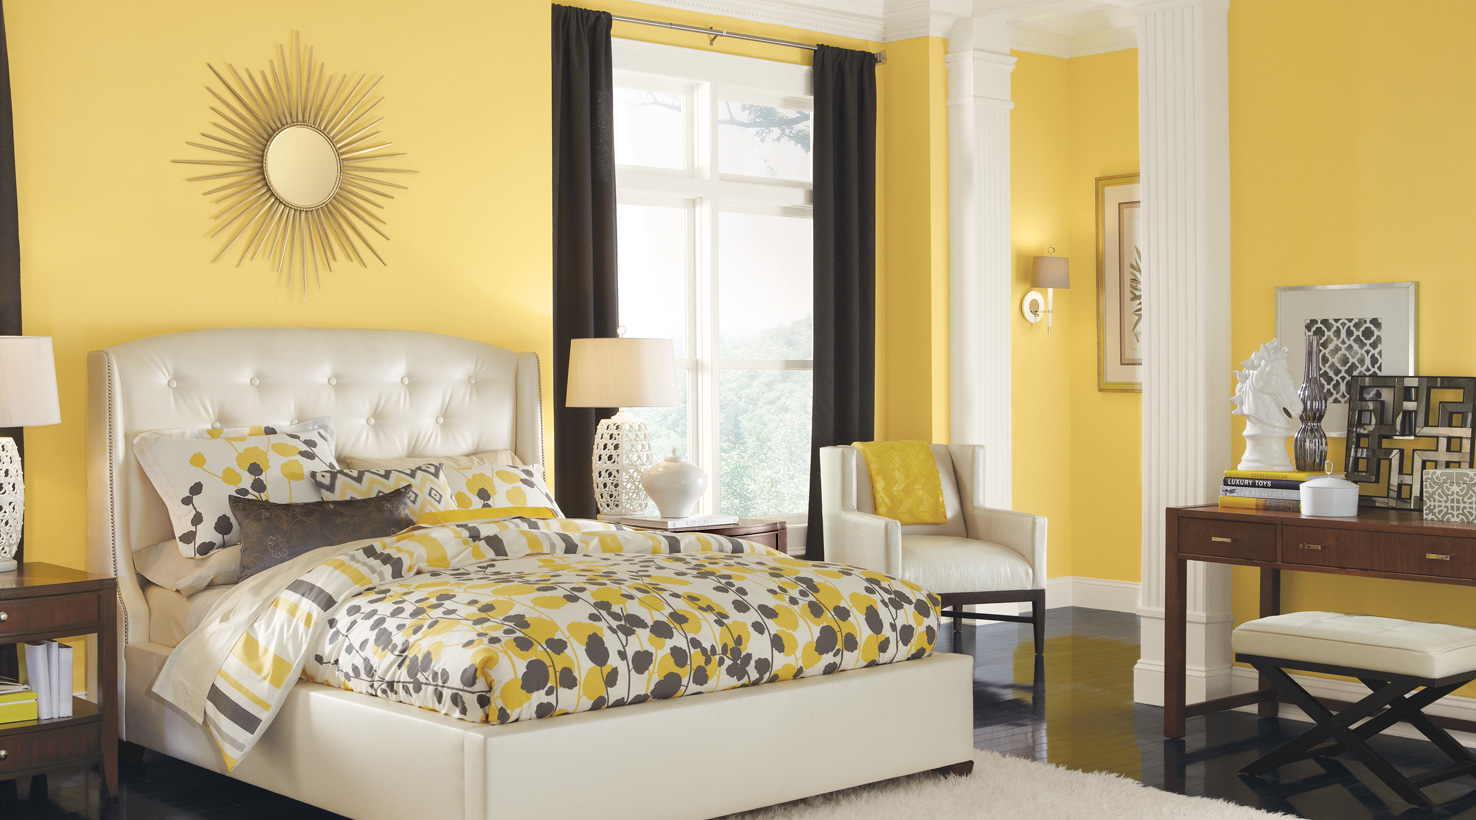 Bedroom Paint Color Ideas Inspiration Gallery Sherwin Williams regarding measurements 1476 X 820